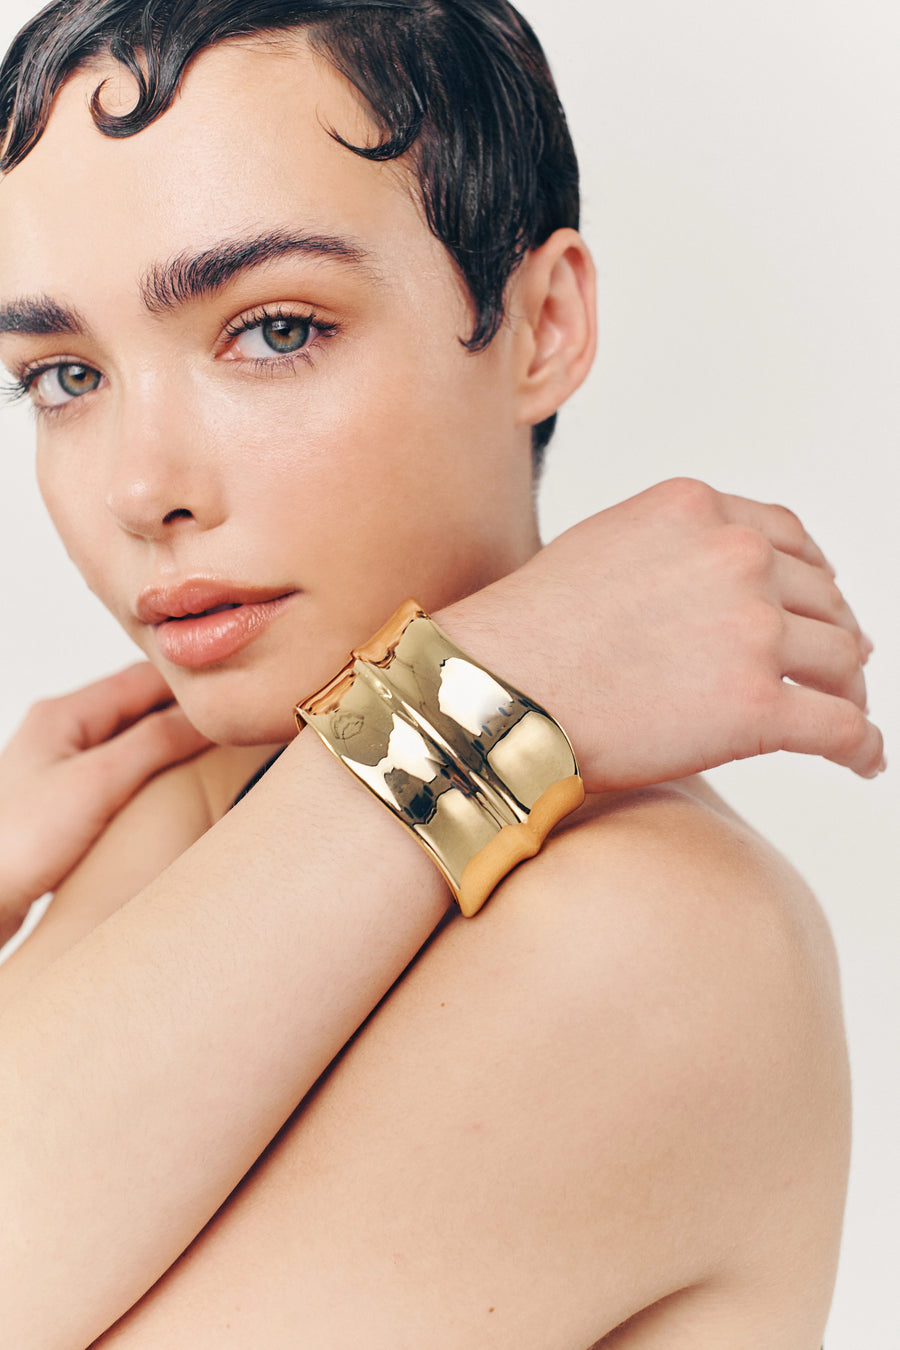 MUNIFICENCE Cuff. Segmented design in high gloss finish, cuff bracelet, 18K gold vermeil, handmade, hypoallergenic, water-resistant